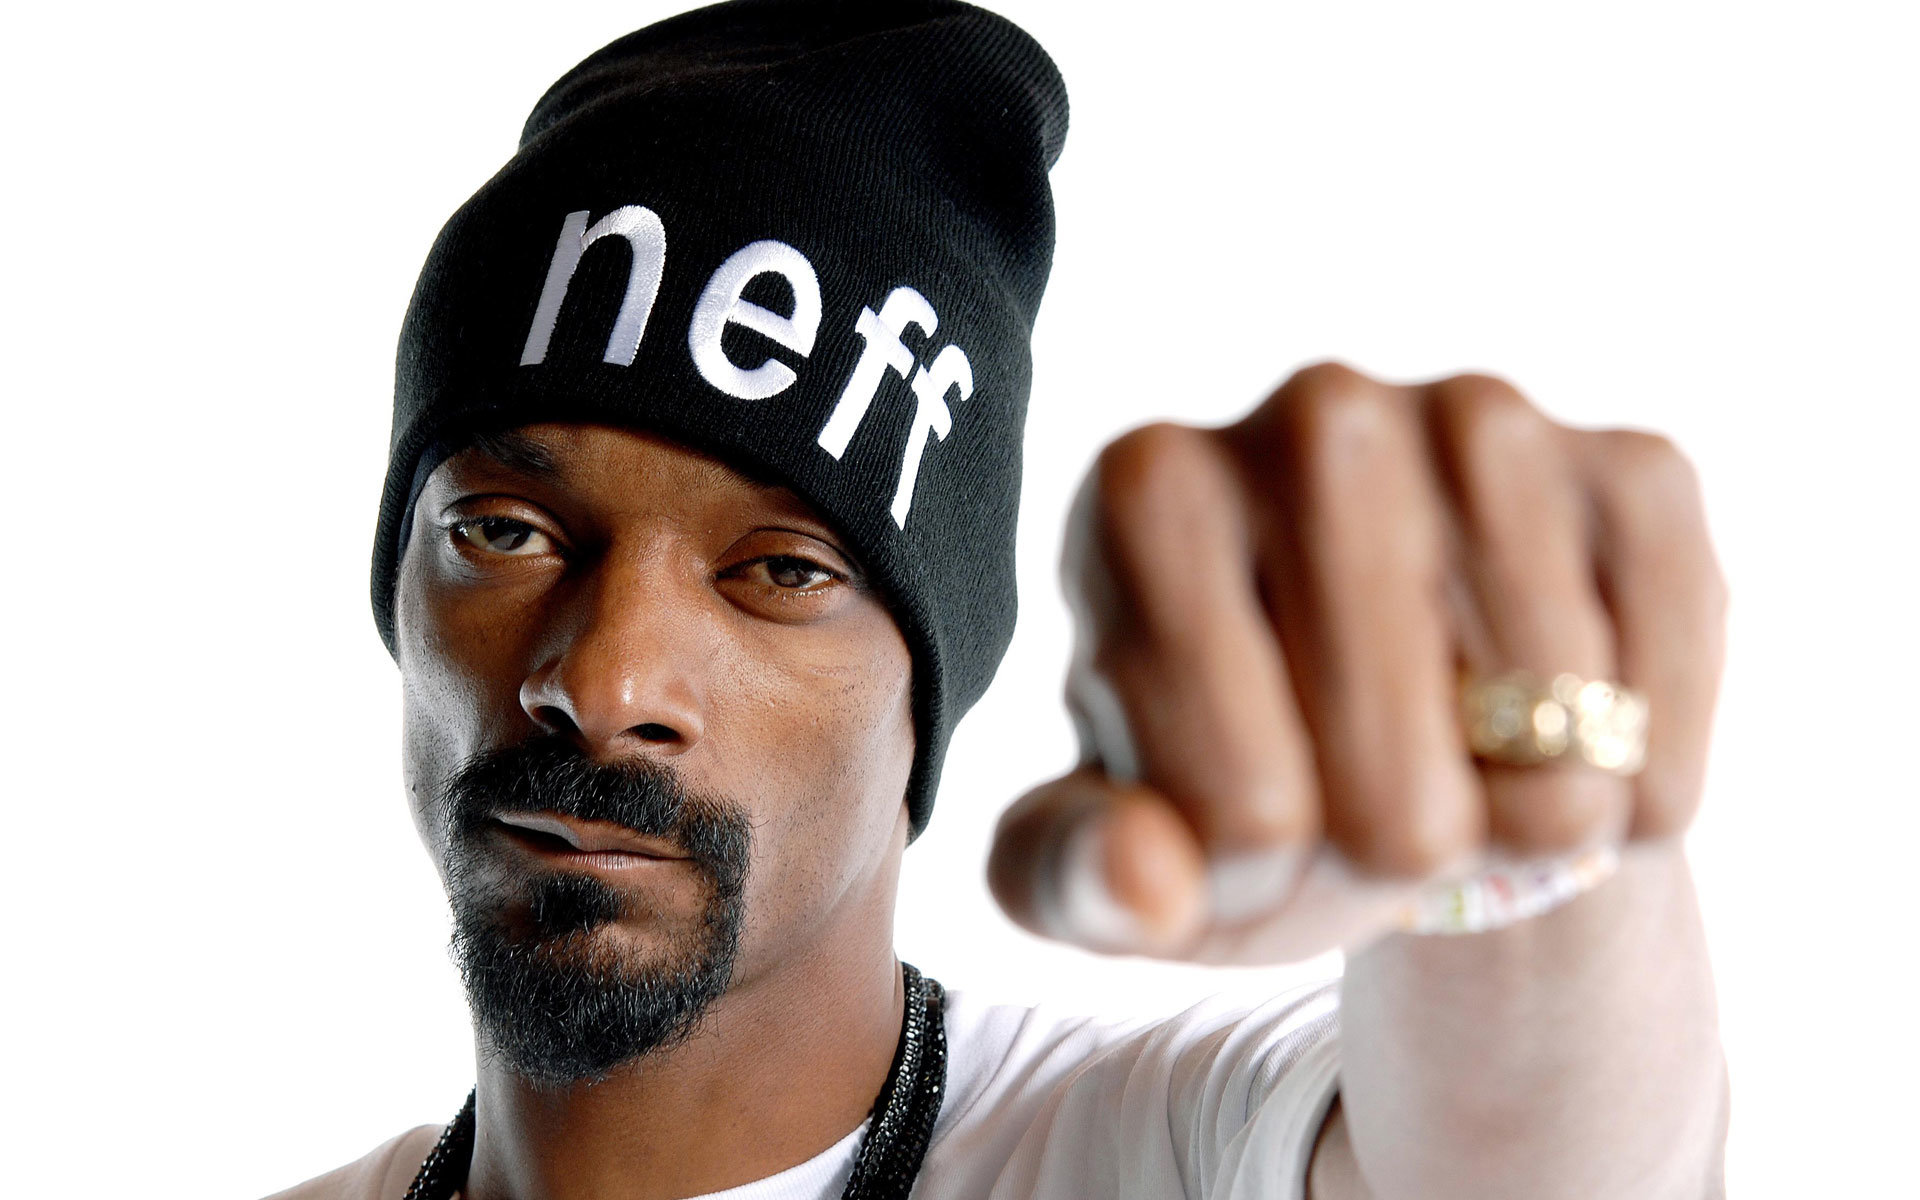 Snoop Dogg wallpapers HD for desktop backgrounds